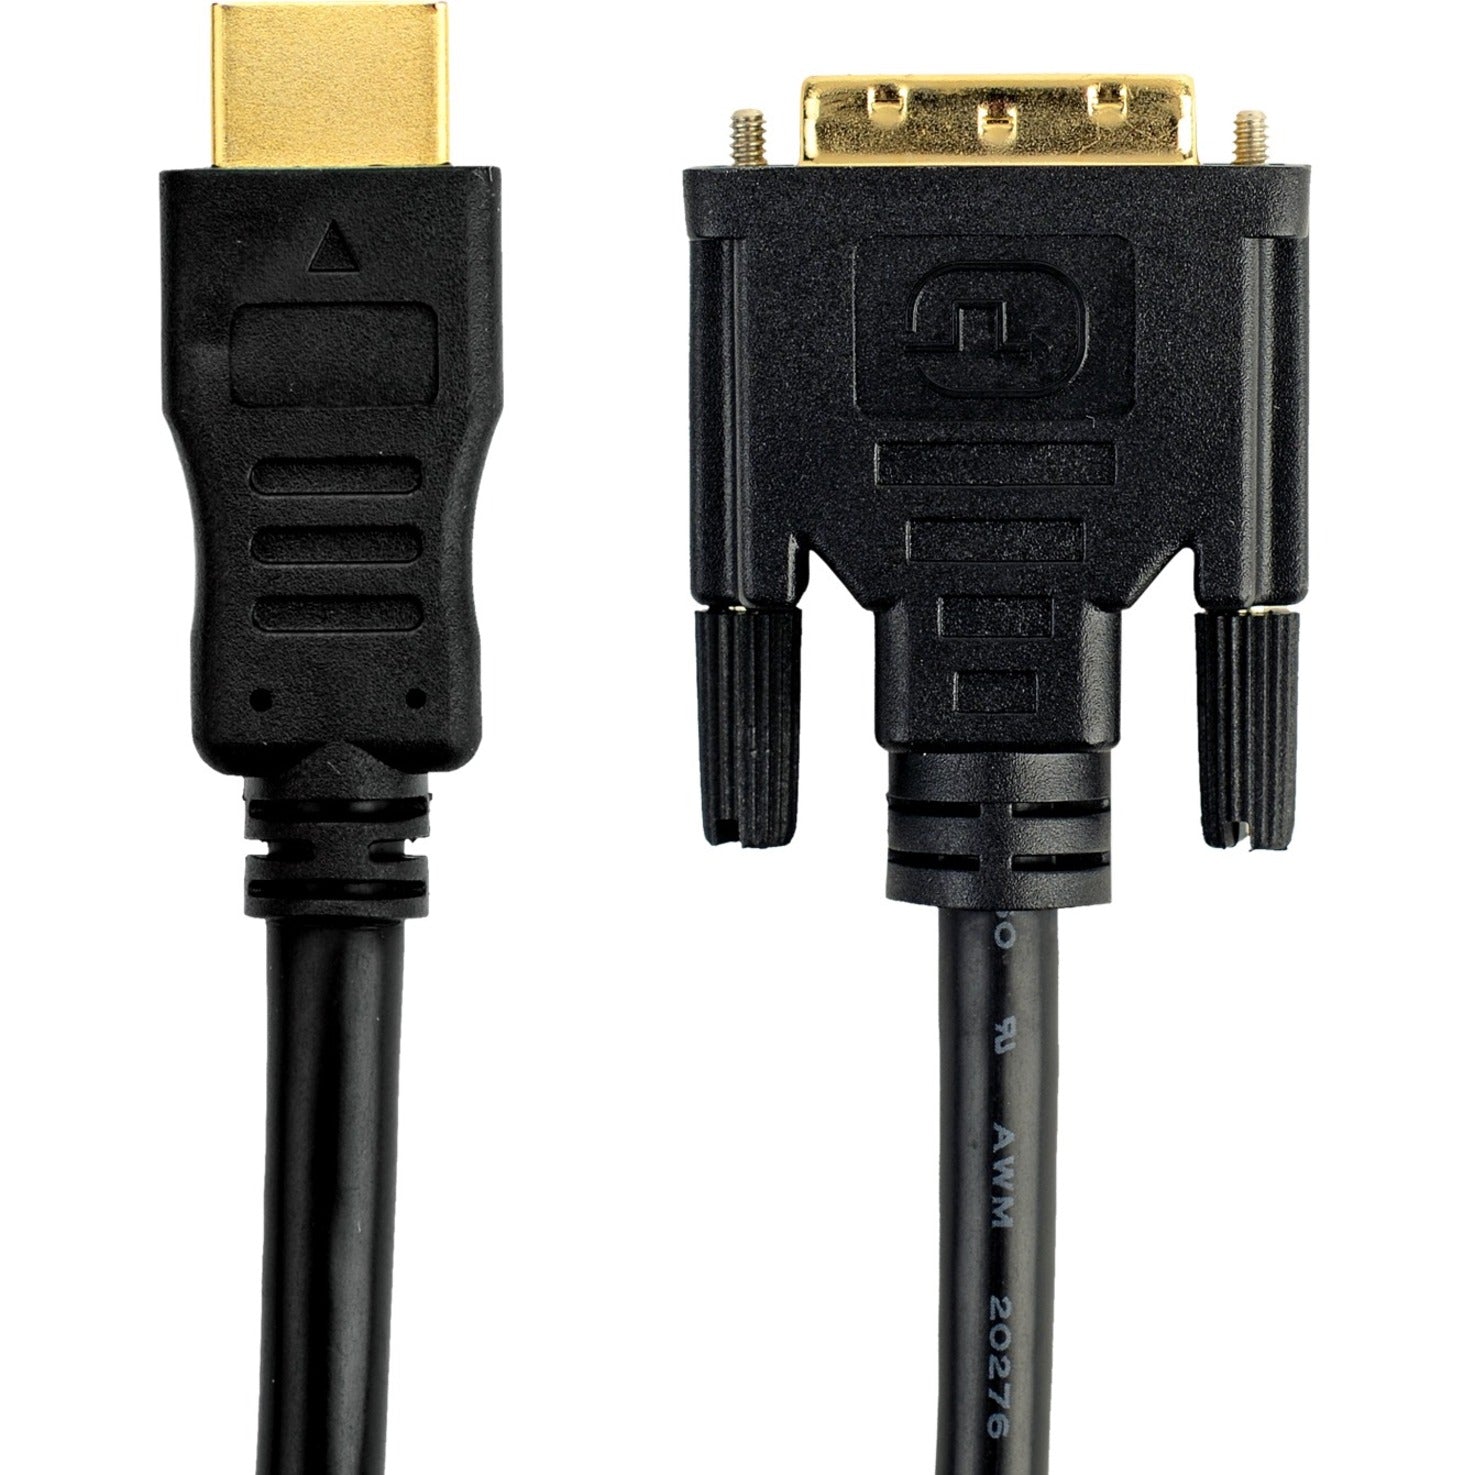 Belkin F2E8242b03 HDMI zu DVI Kabel 3 ft Lifetime Warranty ersetzt F2E8171-Serie